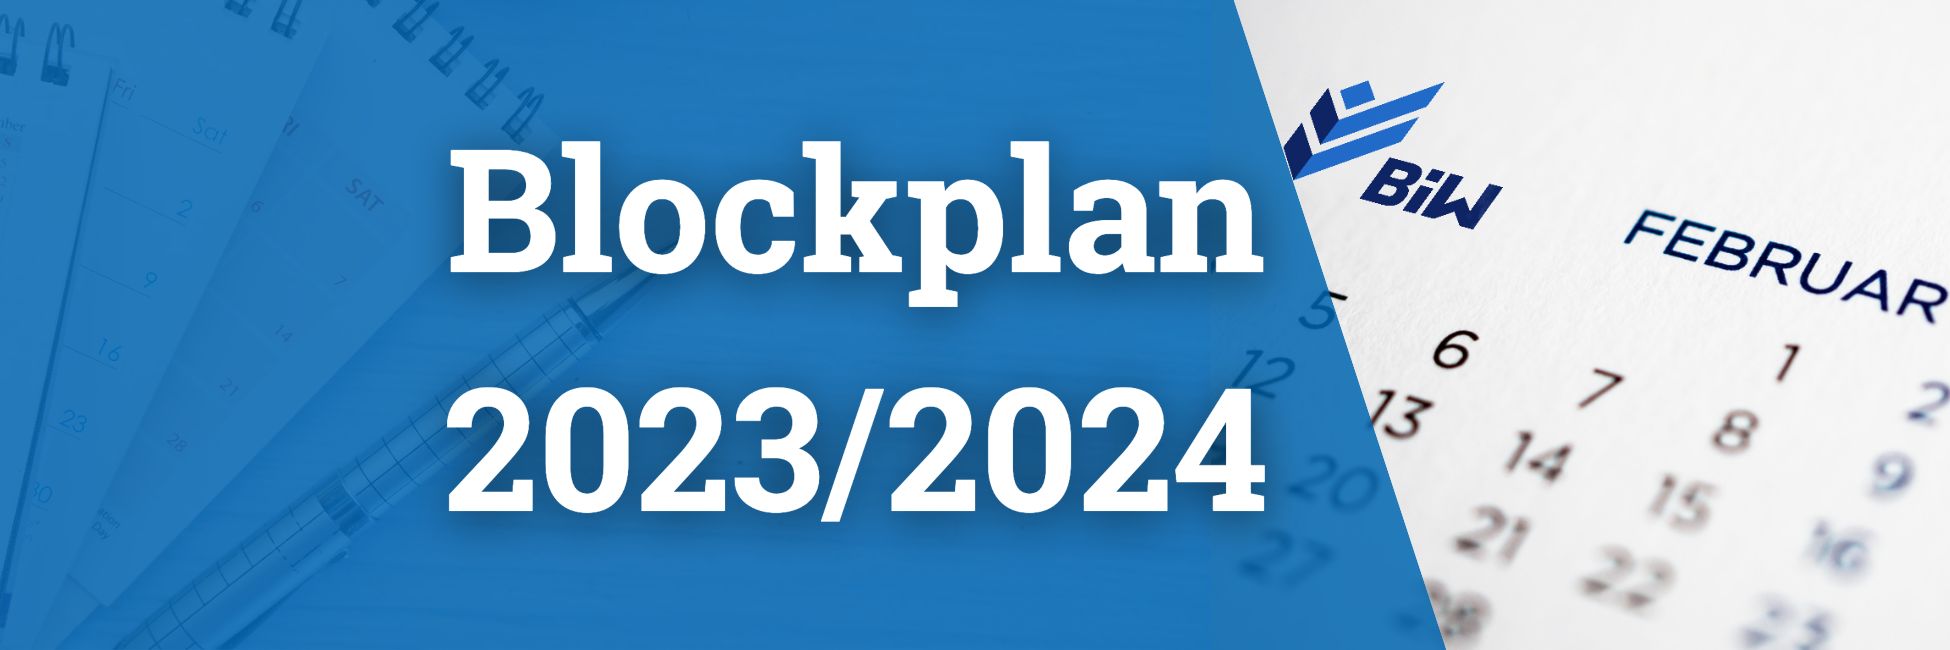 Blockplan 2023-2024